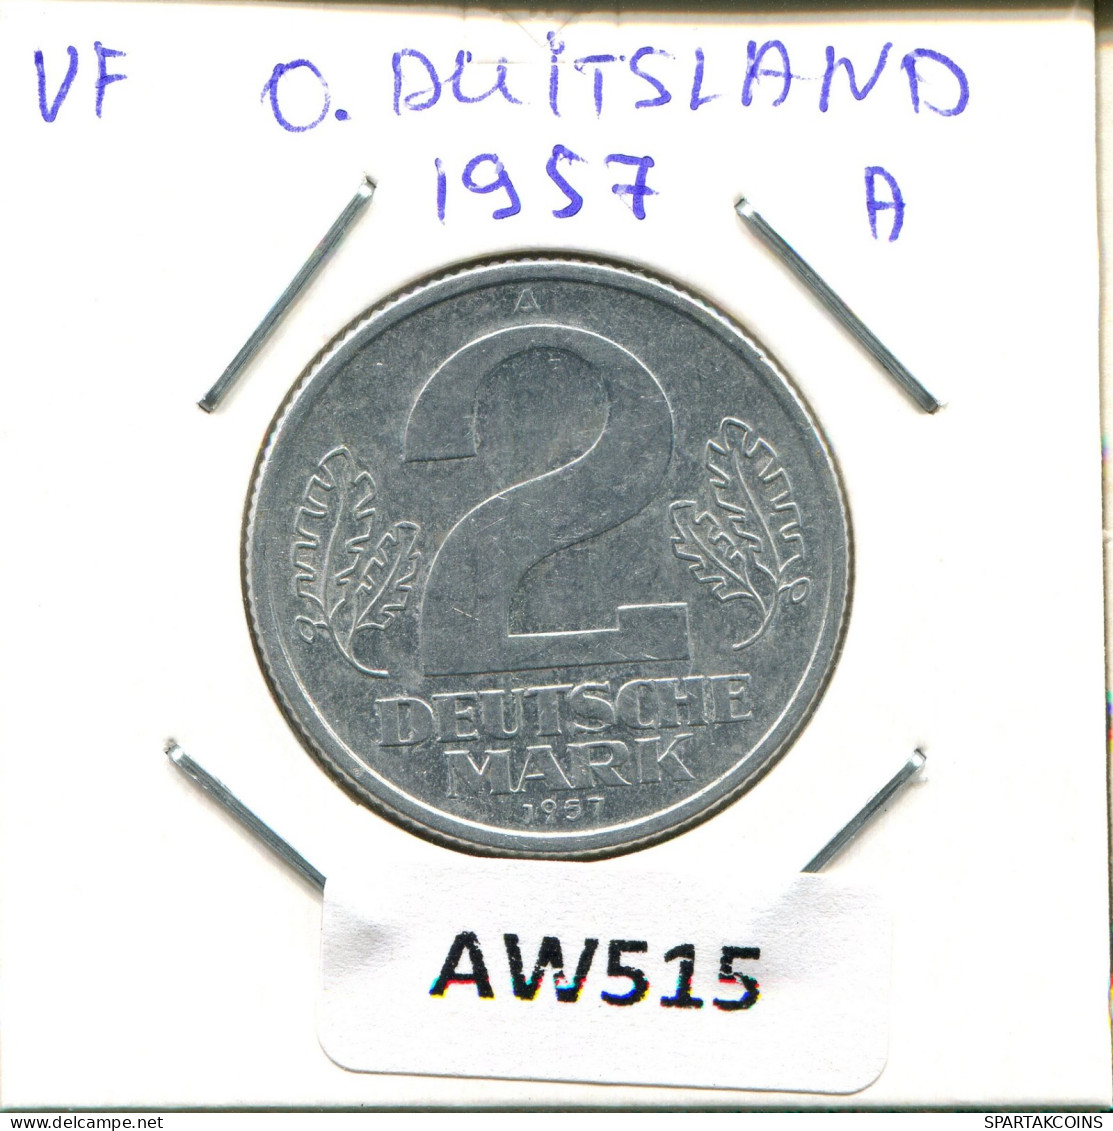 2 DM 1957 A DDR EAST GERMANY Coin #AW515.U.A - 2 Mark